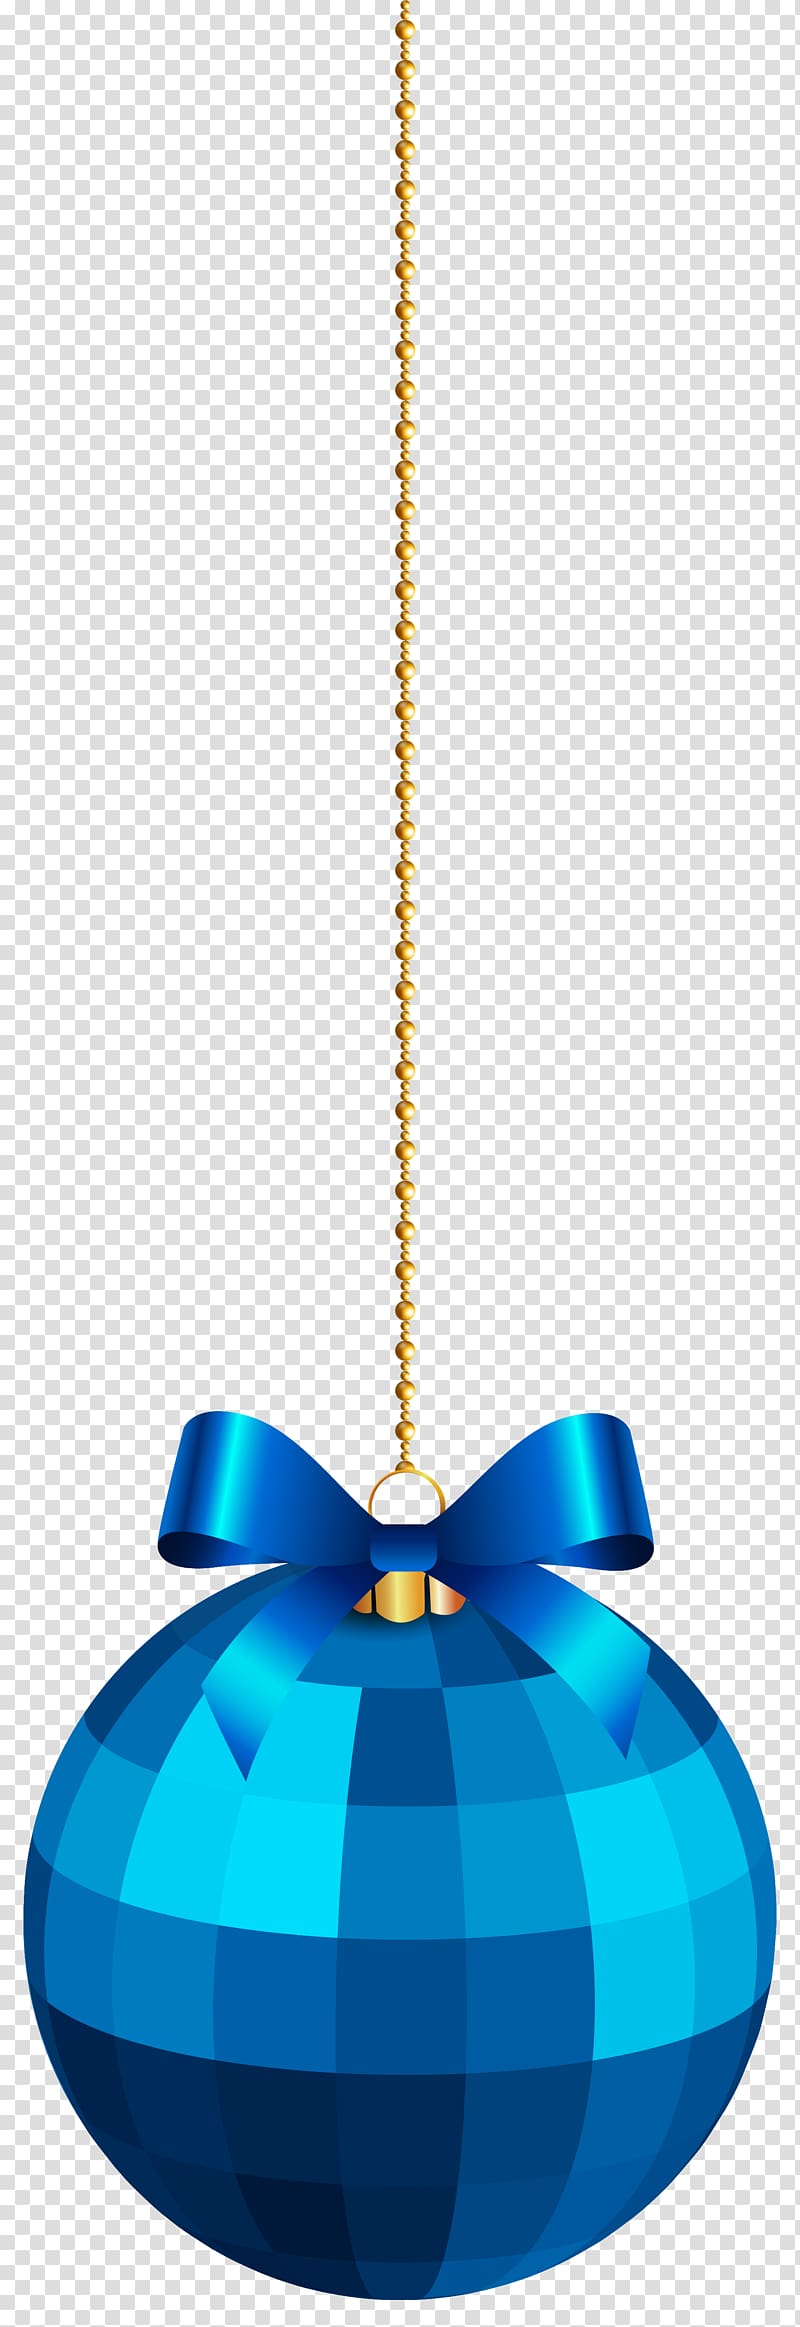 blue bauble illustration, Christmas ornament Christmas decoration , Hanging Blue Christmas Ball with Bow transparent background PNG clipart